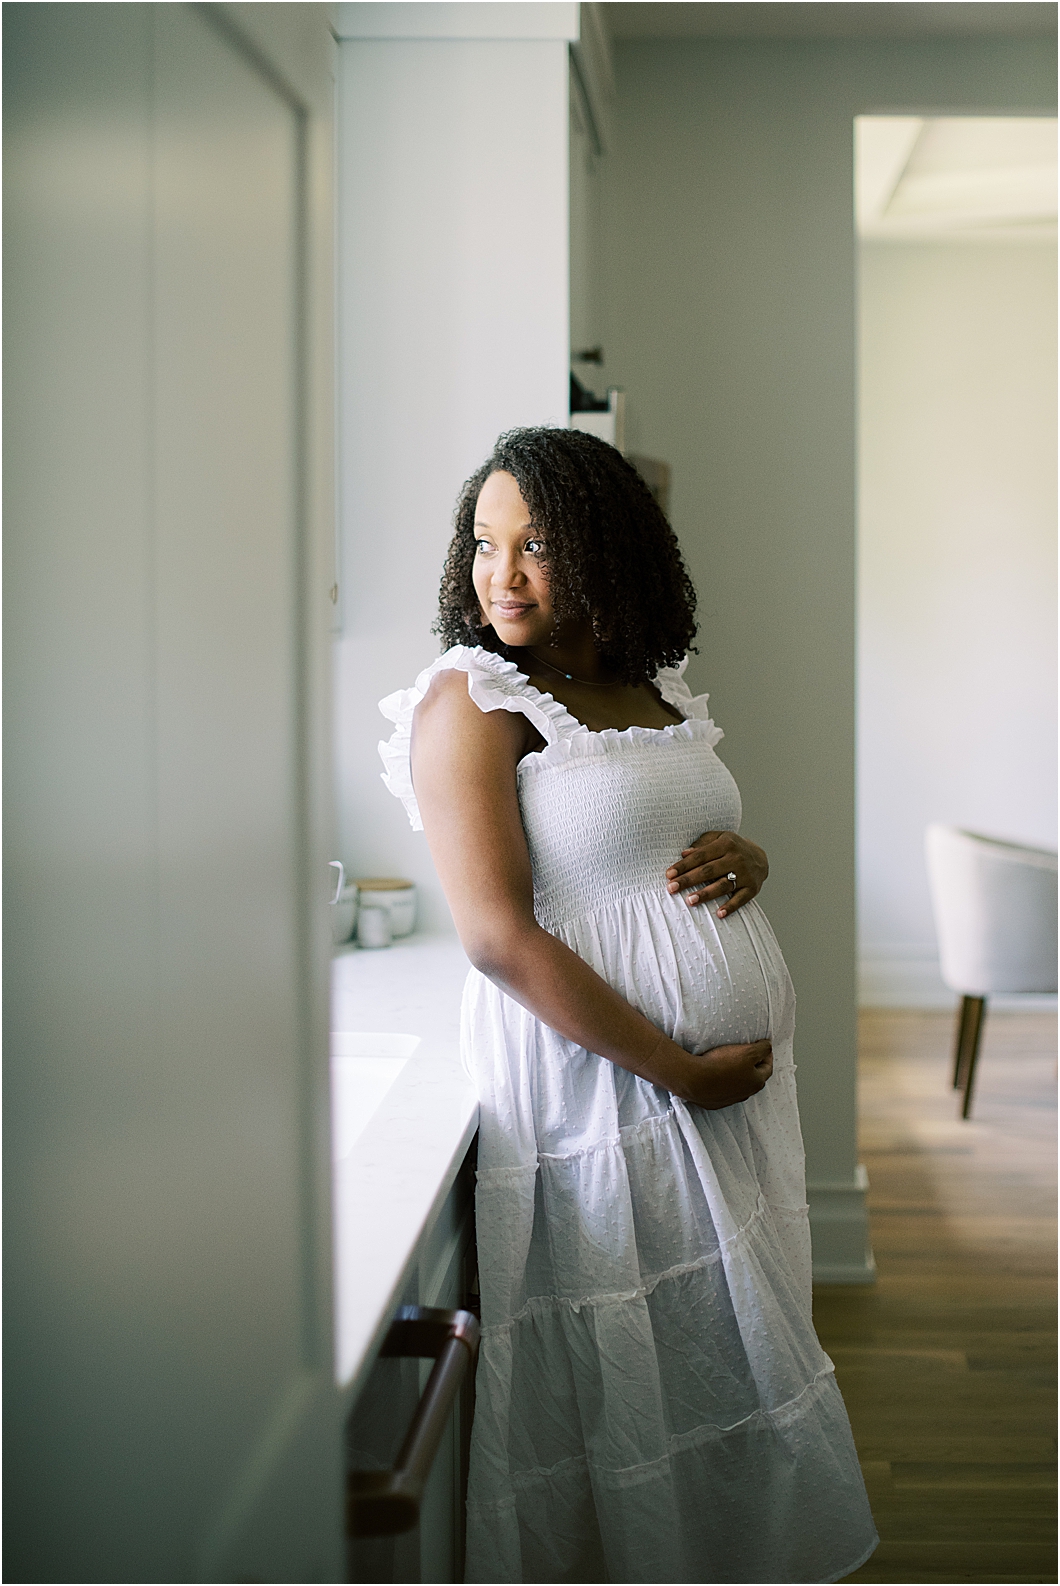 Maternity Photos at Home | Charlotte North Carolina Photographer